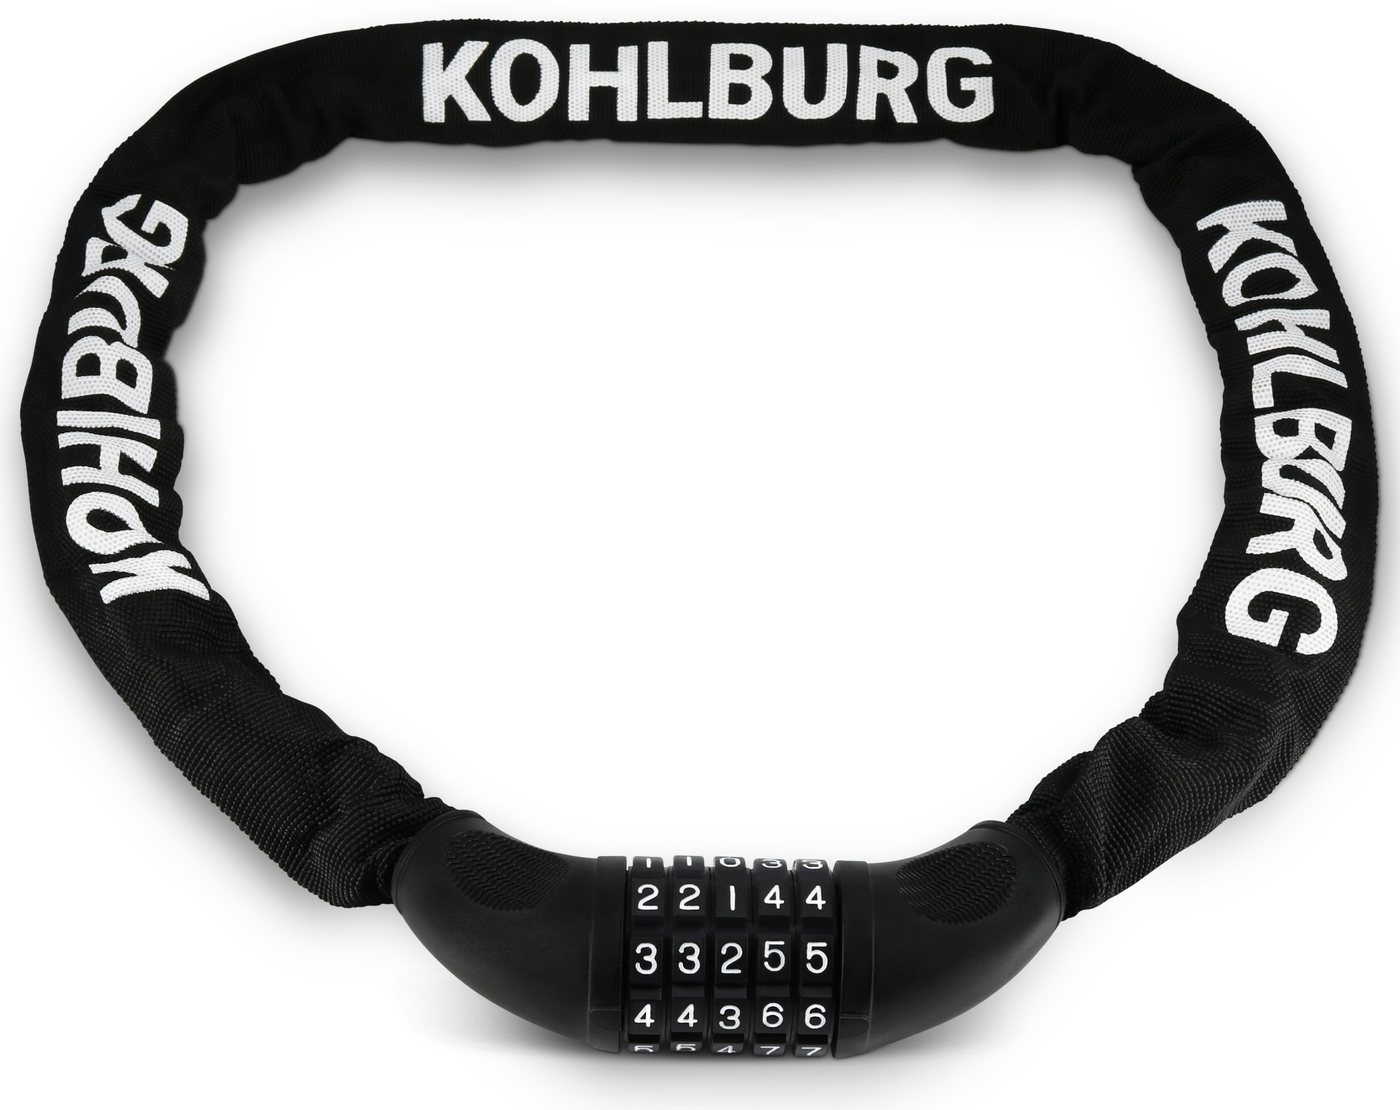 KOHLBURG Zahlenkettenschloss 115cm lang & 6mm stark mit Zahlencode, starkes Fahrradschloss mit Kombination für Fahrrad & E-Bike von KOHLBURG